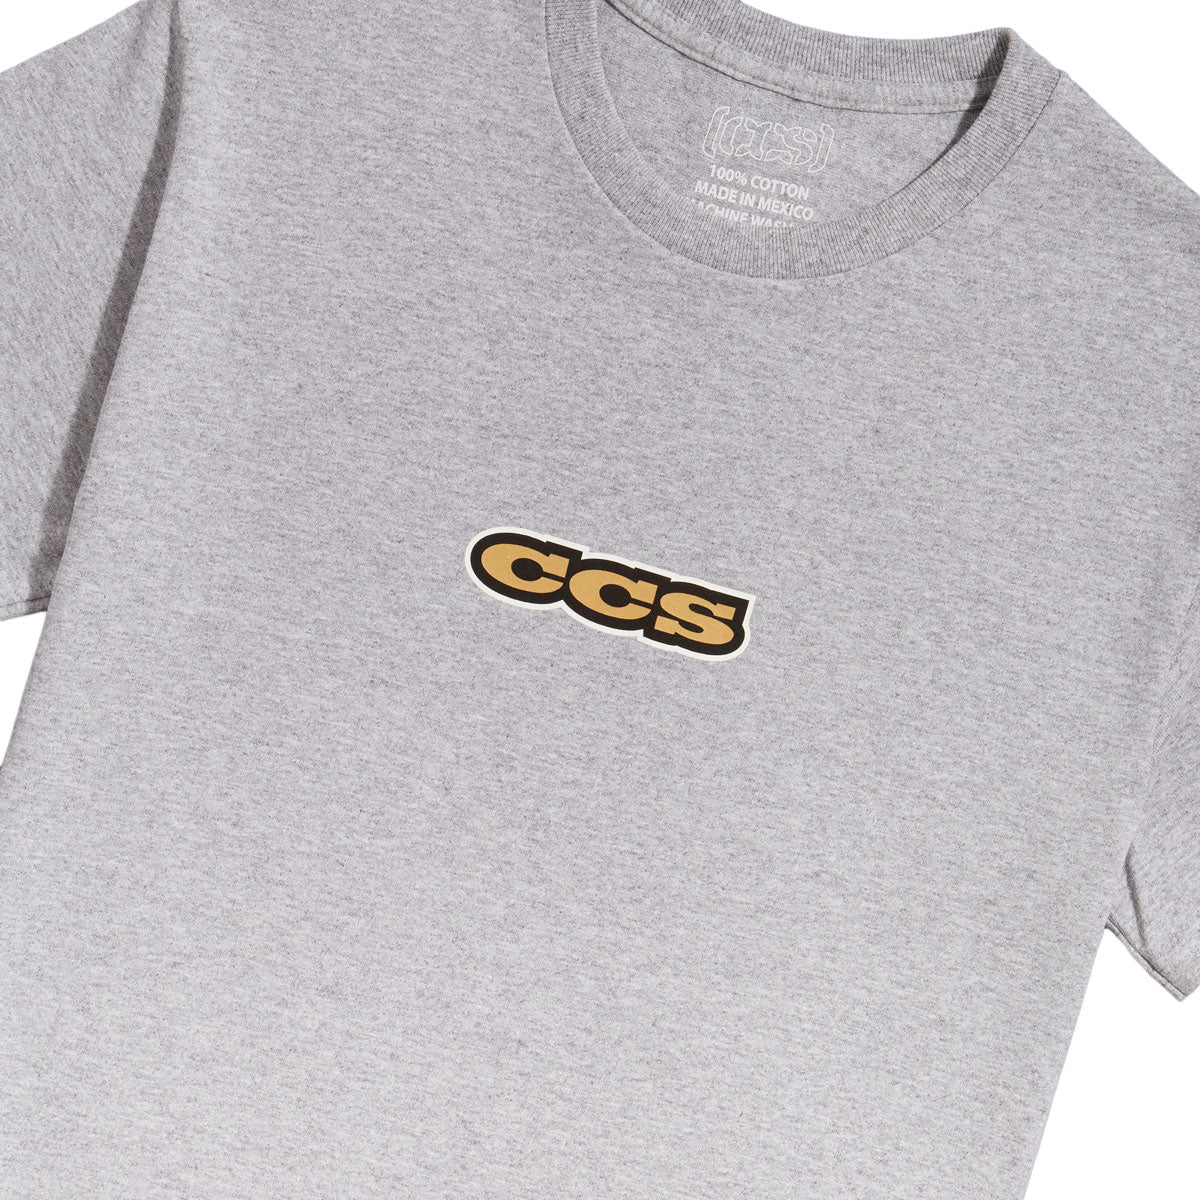 CCS 96 Logo T-Shirt - Sport Grey/Gold/White image 2